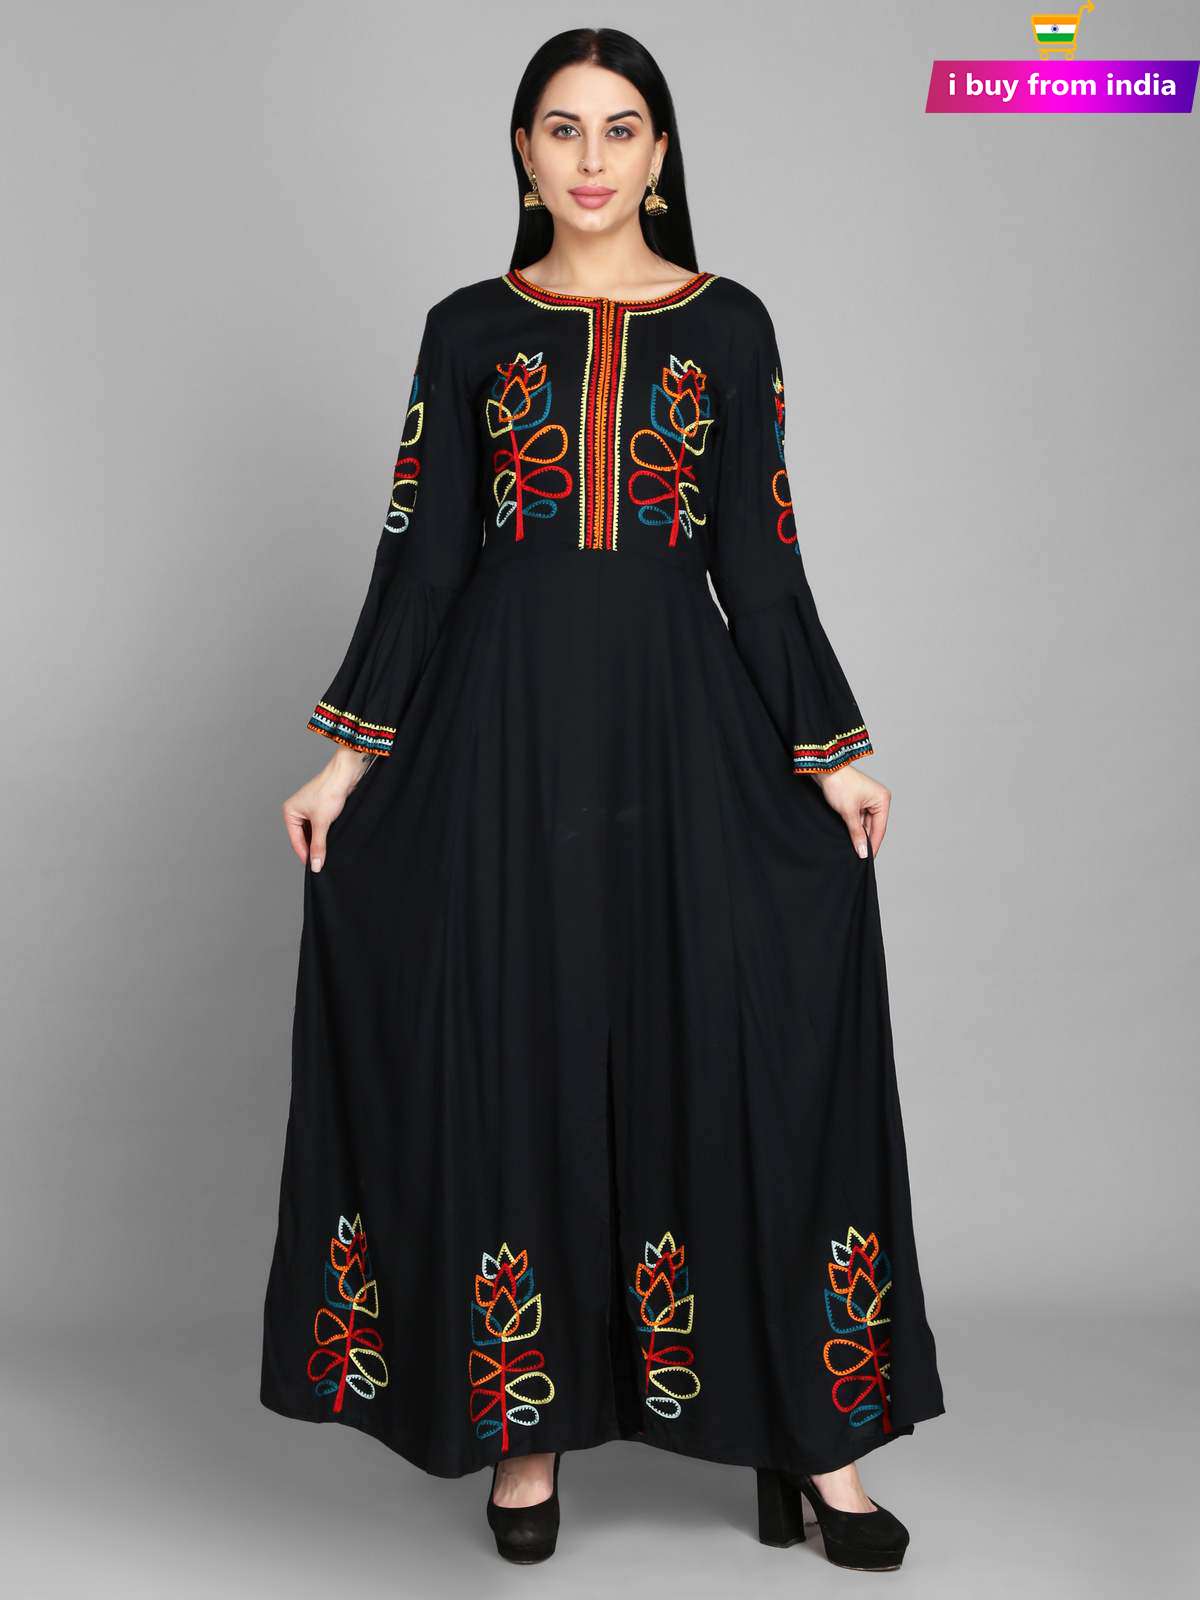 Anarkali dress | Buy Anarkali Suits Online @ ibuyfromindia.com